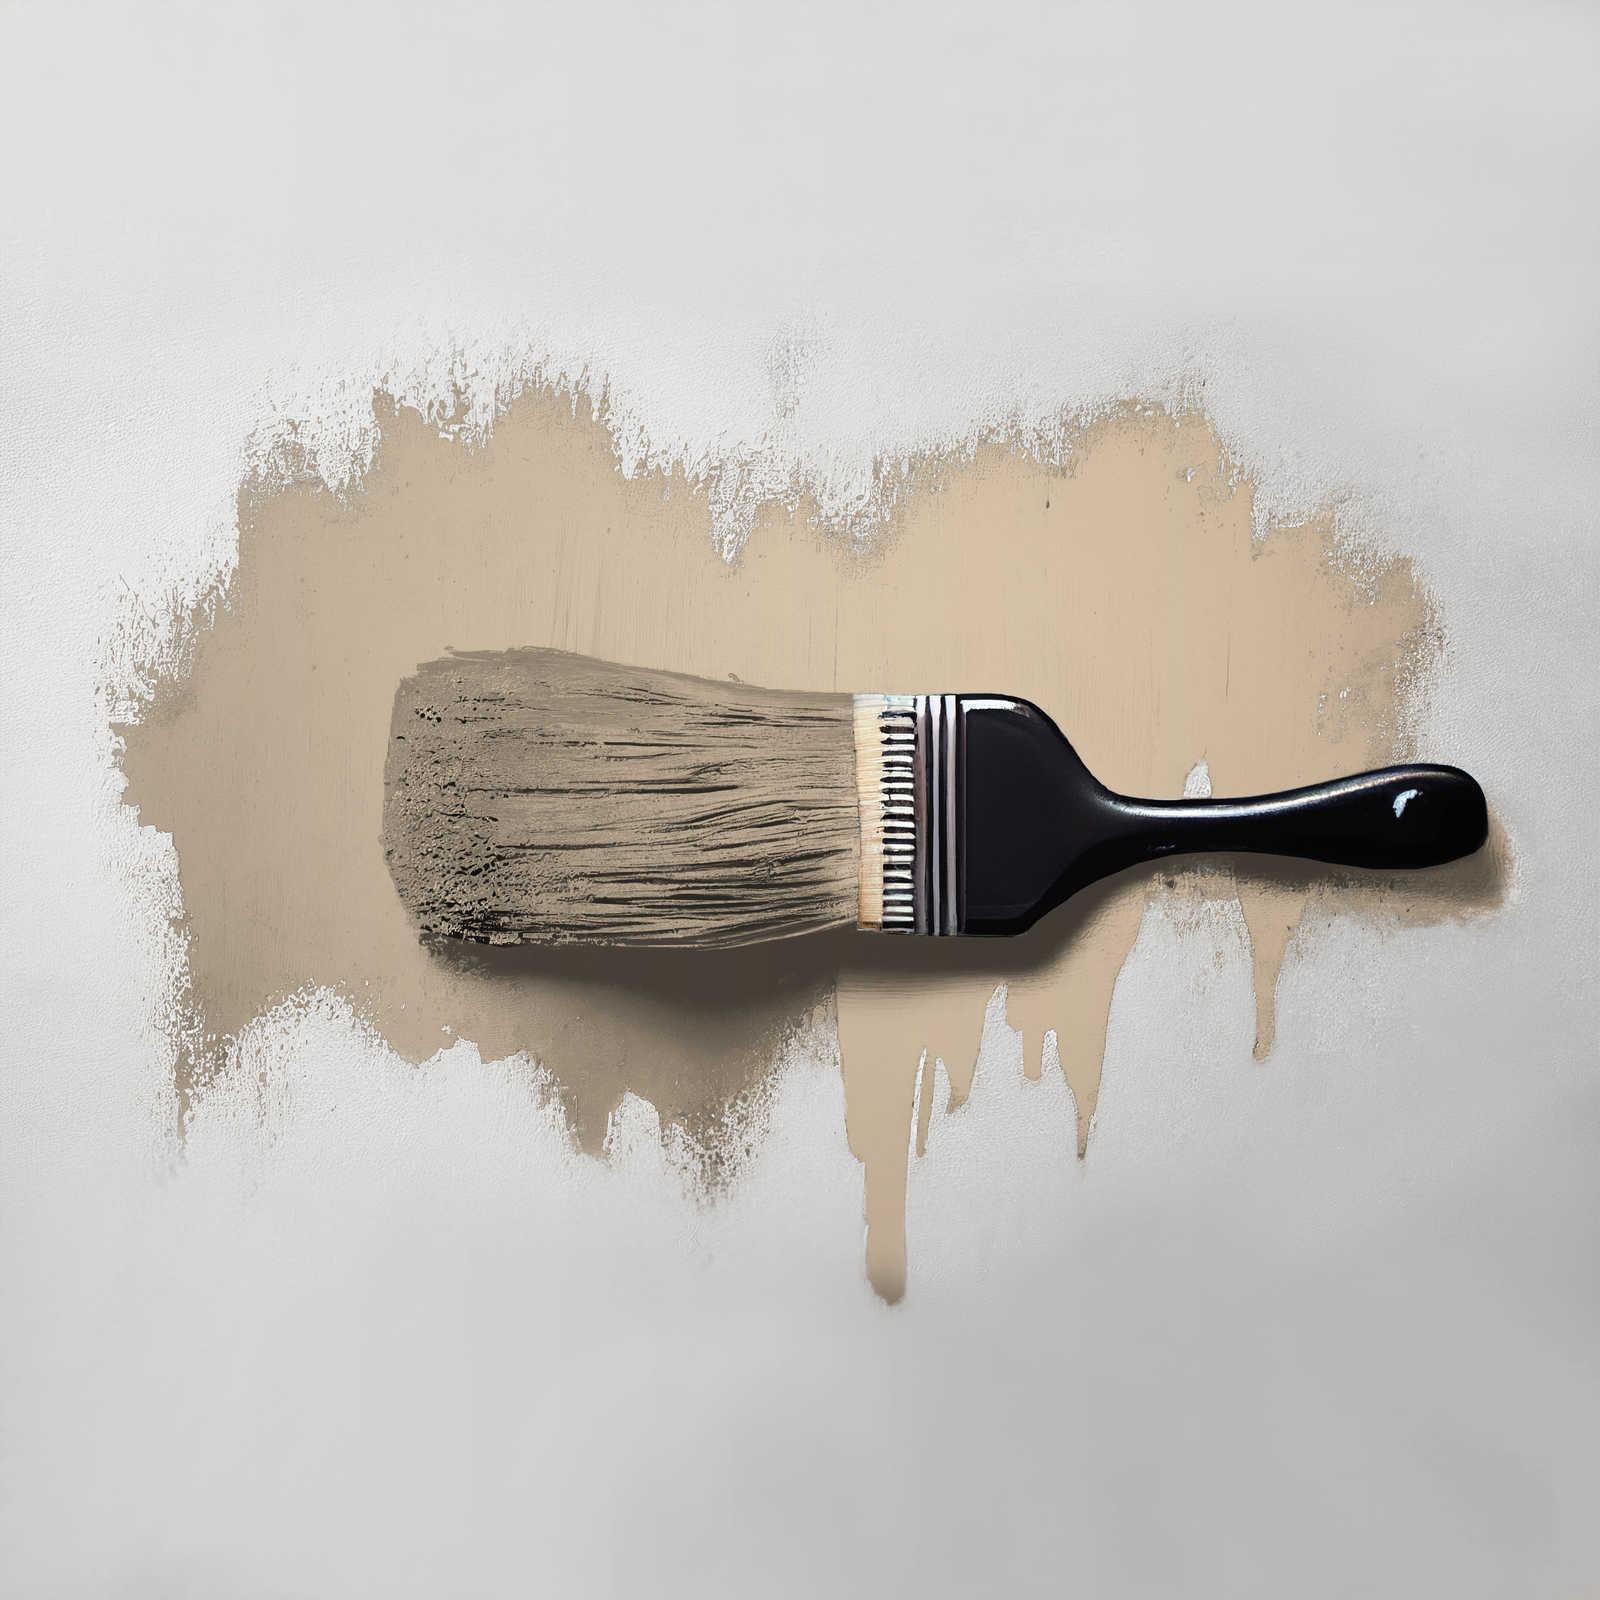             Pittura murale TCK6002 »Flat White Coffee« in beige caldo – 2,5 litri
        